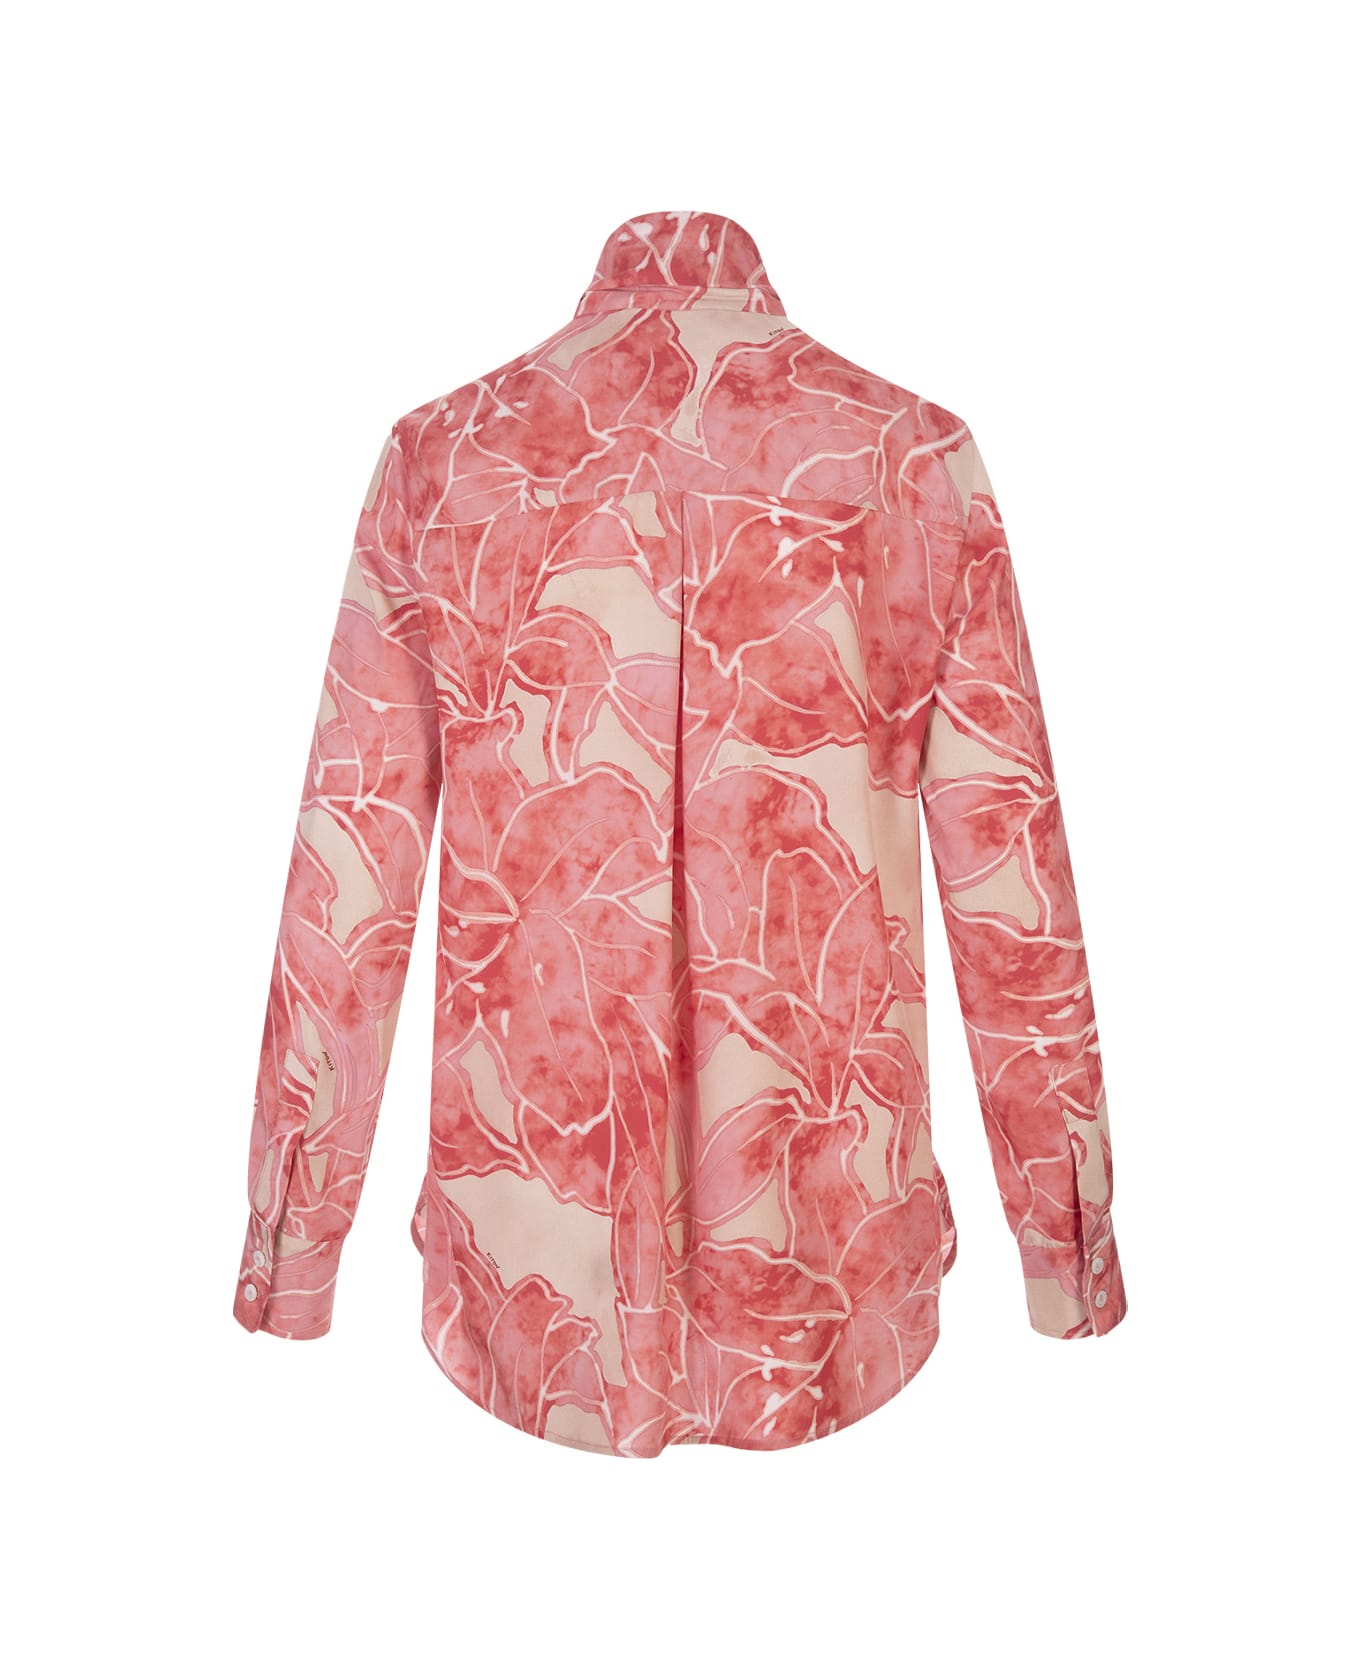 Kiton Printed Pink Silk Shirt With Lavalliere Collar - Pink